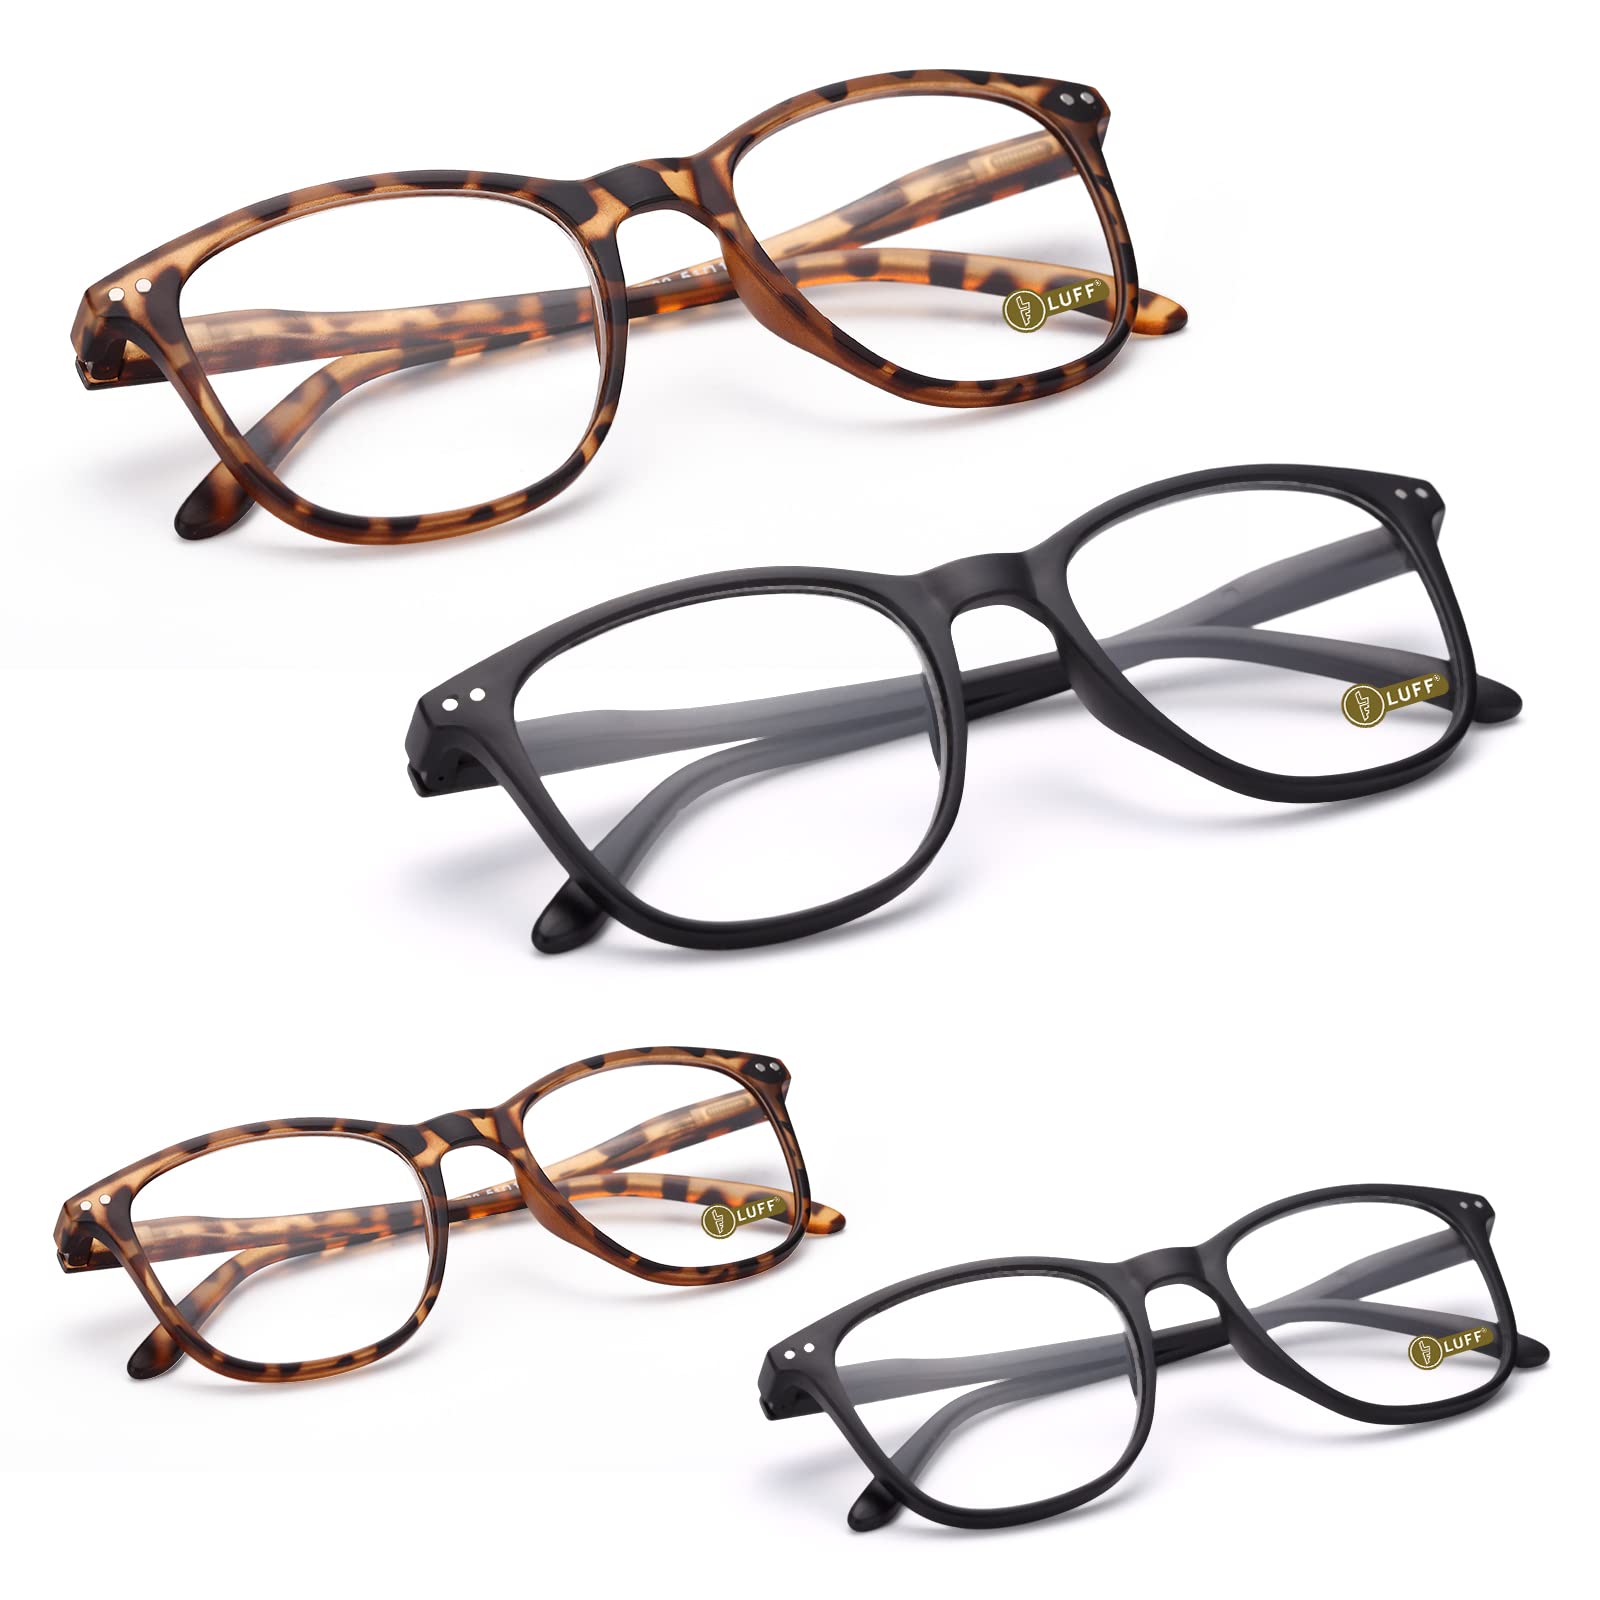 LUFF Blocking Blue Light Glasses - Square Frames Women Eyeglass, 4pcs Reading Eyeglasses with Comfort Spring Hinges